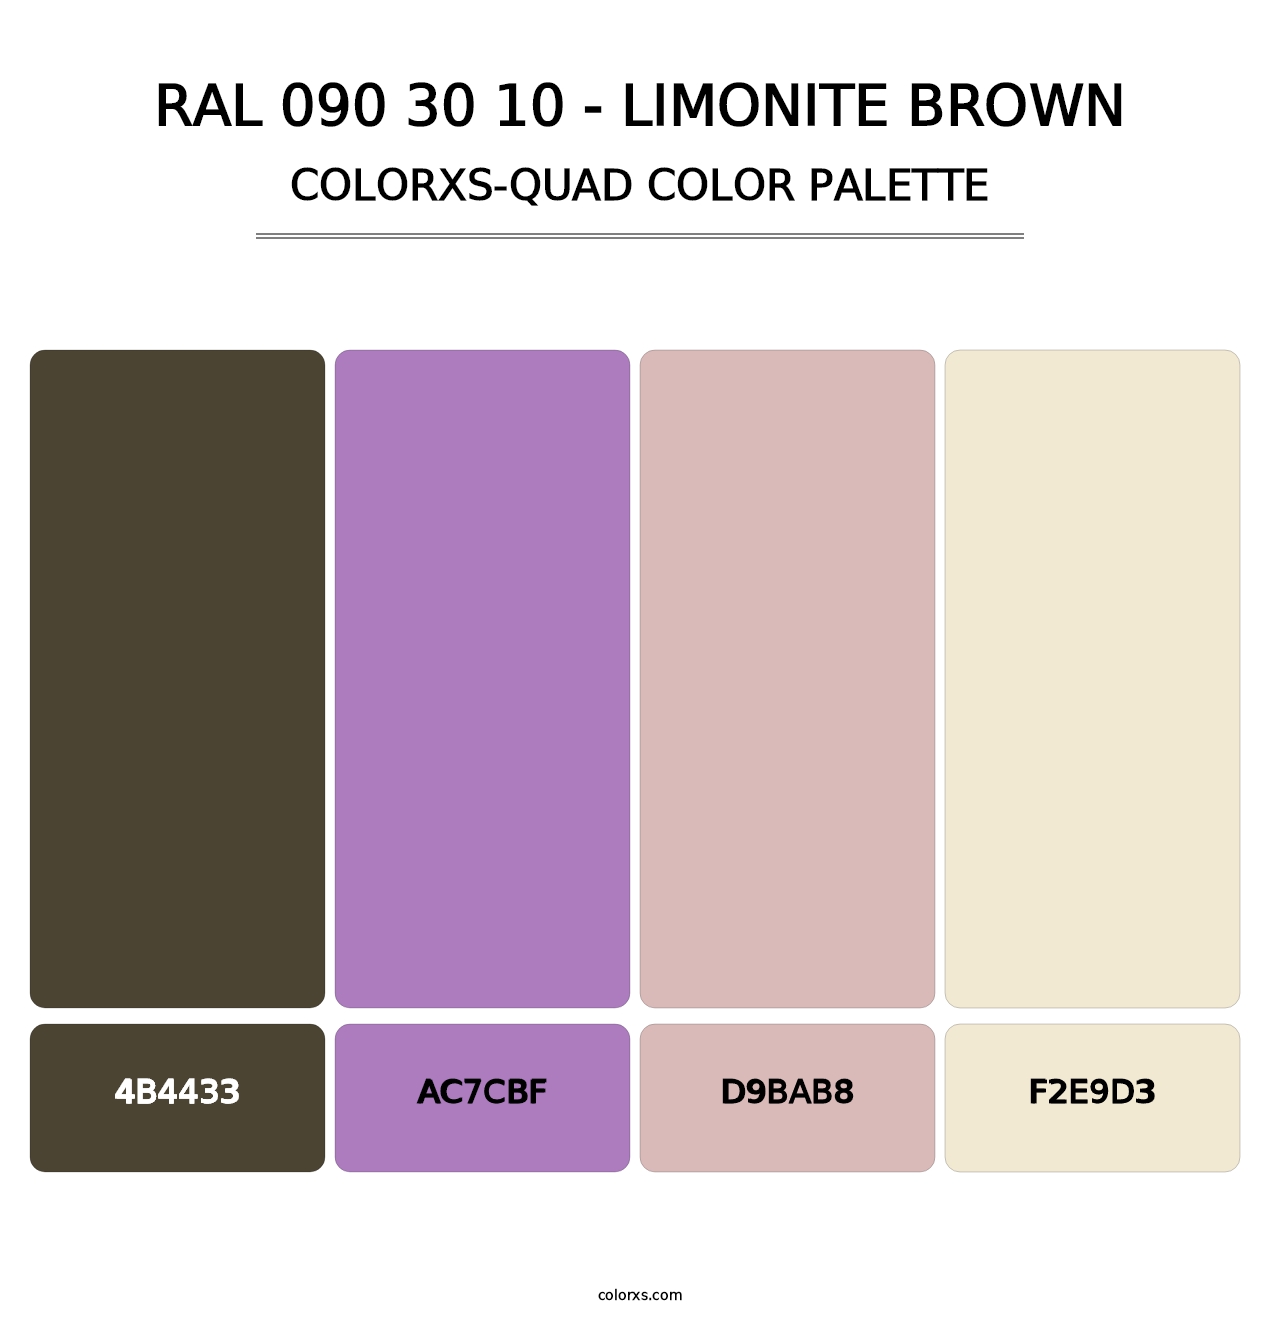 RAL 090 30 10 - Limonite Brown - Colorxs Quad Palette